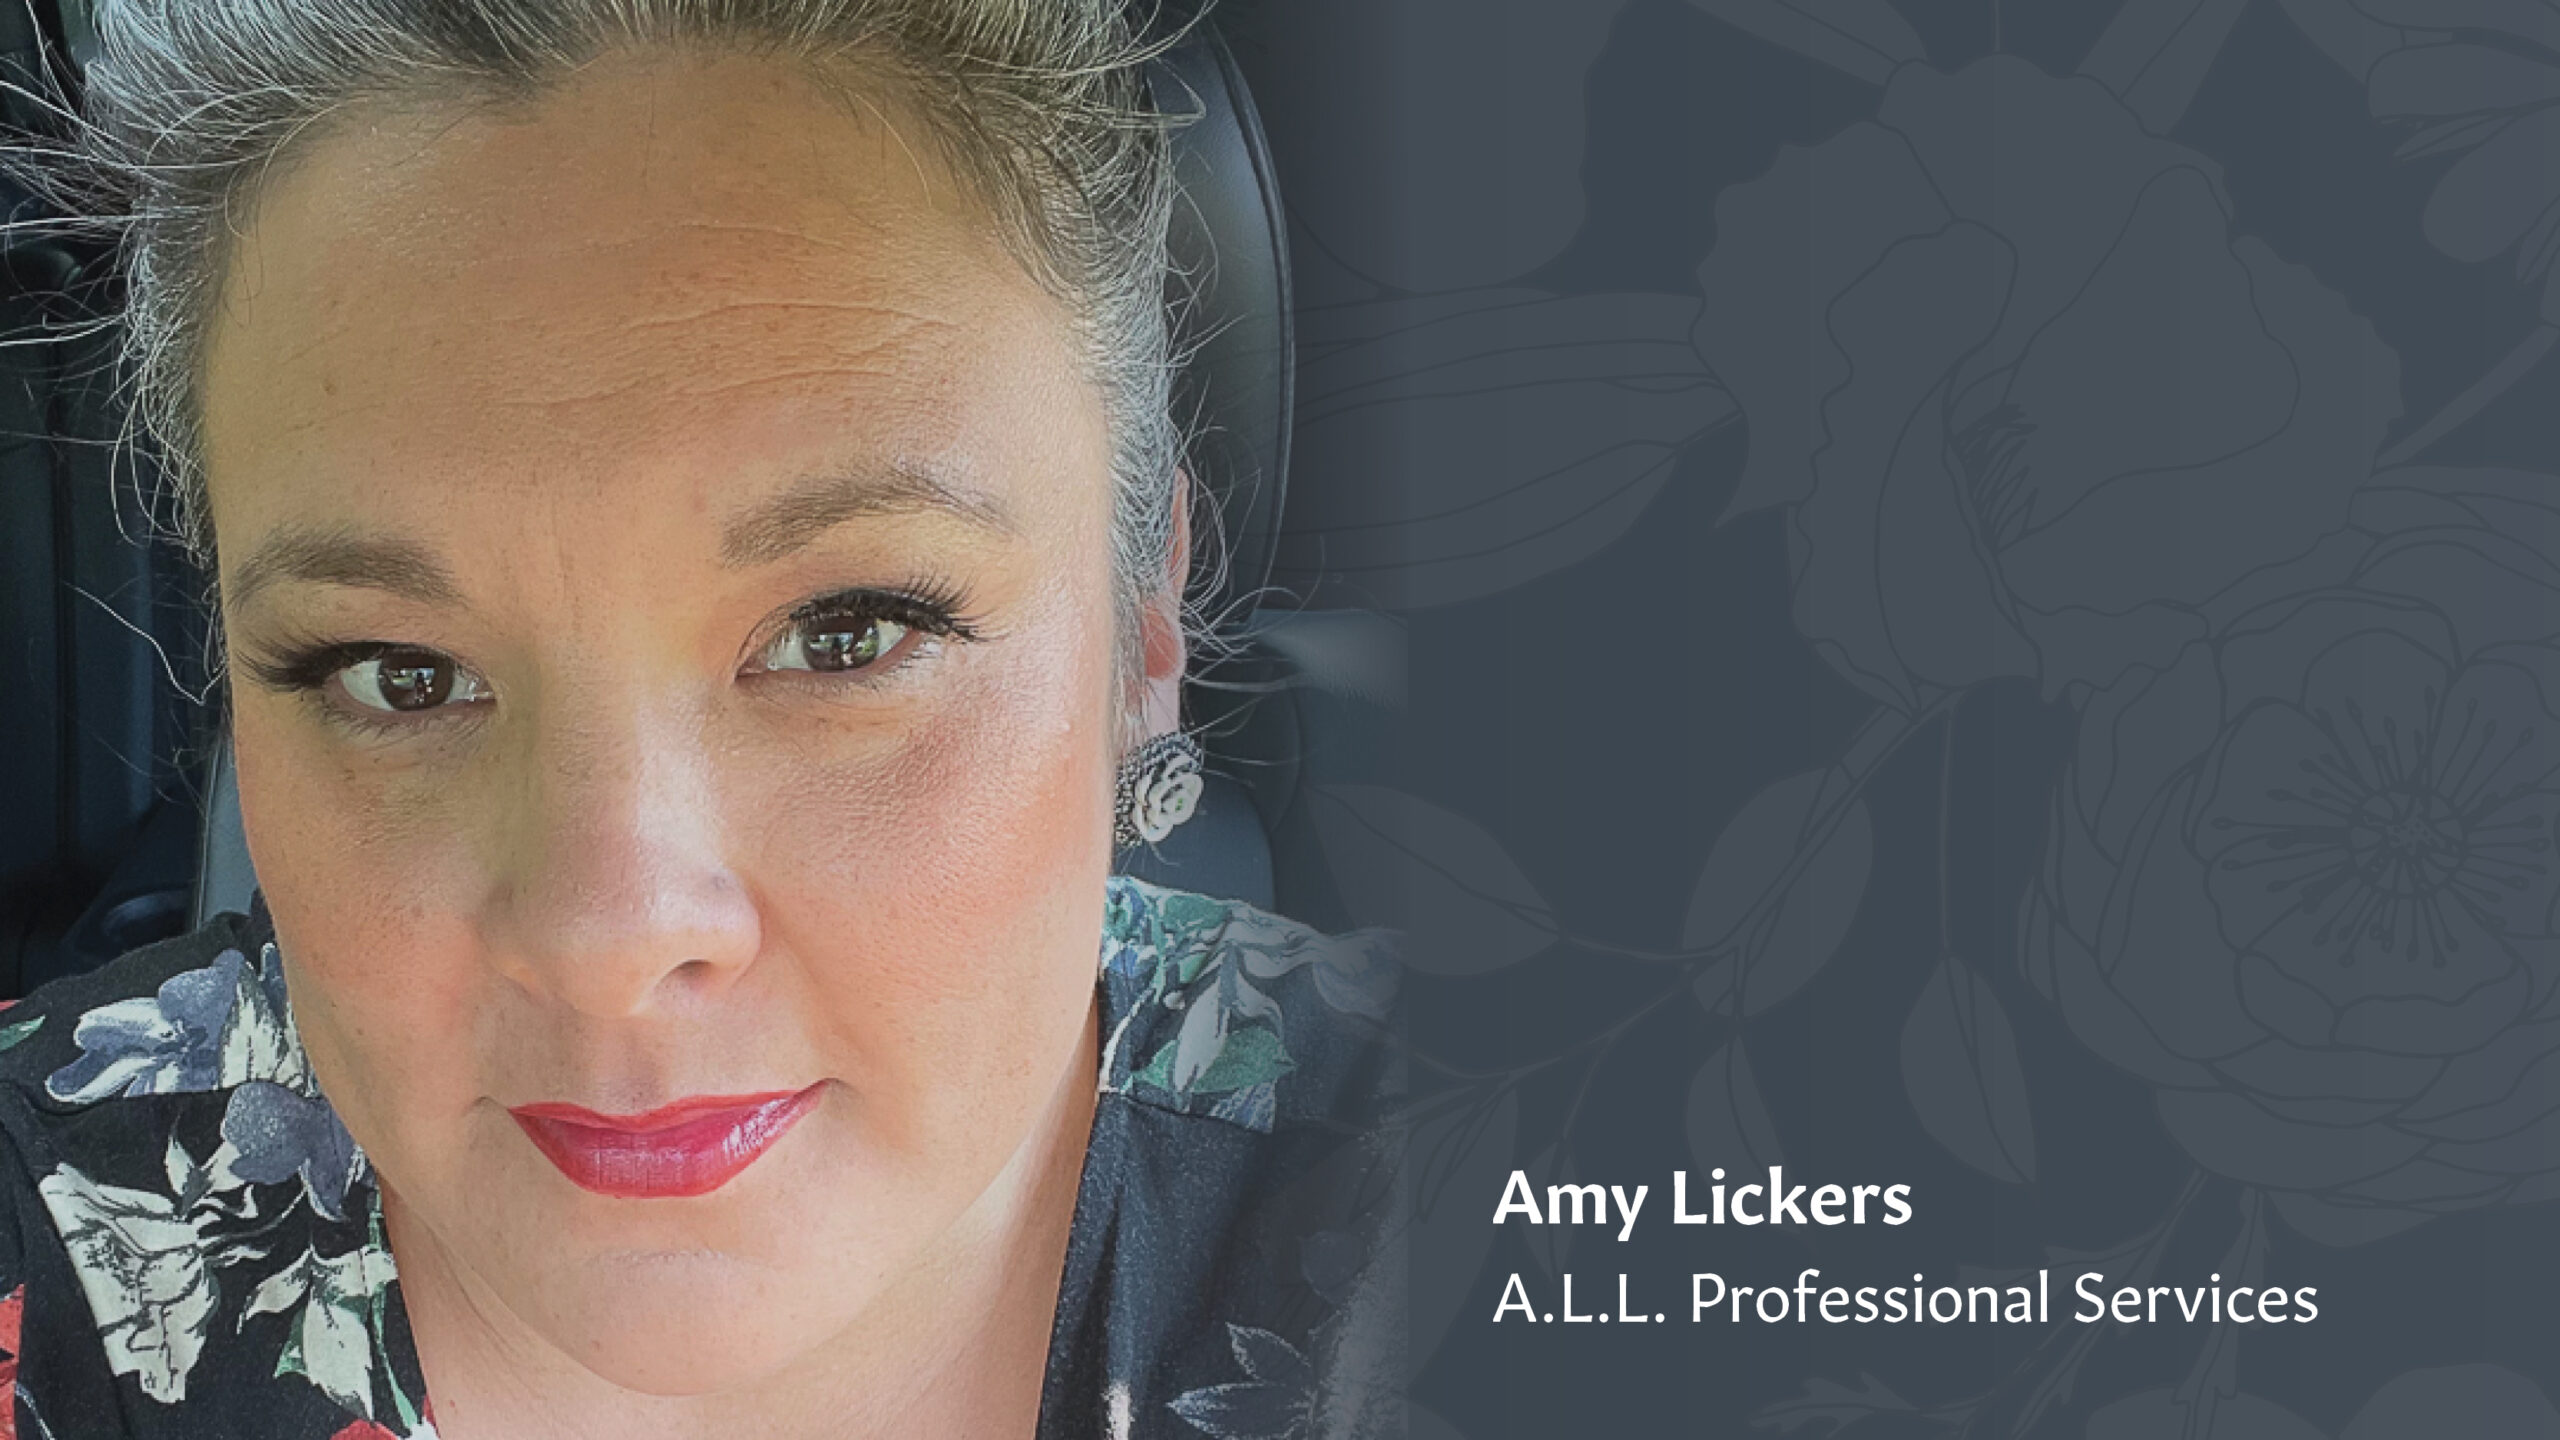 Amy Lickers, A.L.L. Professional Services